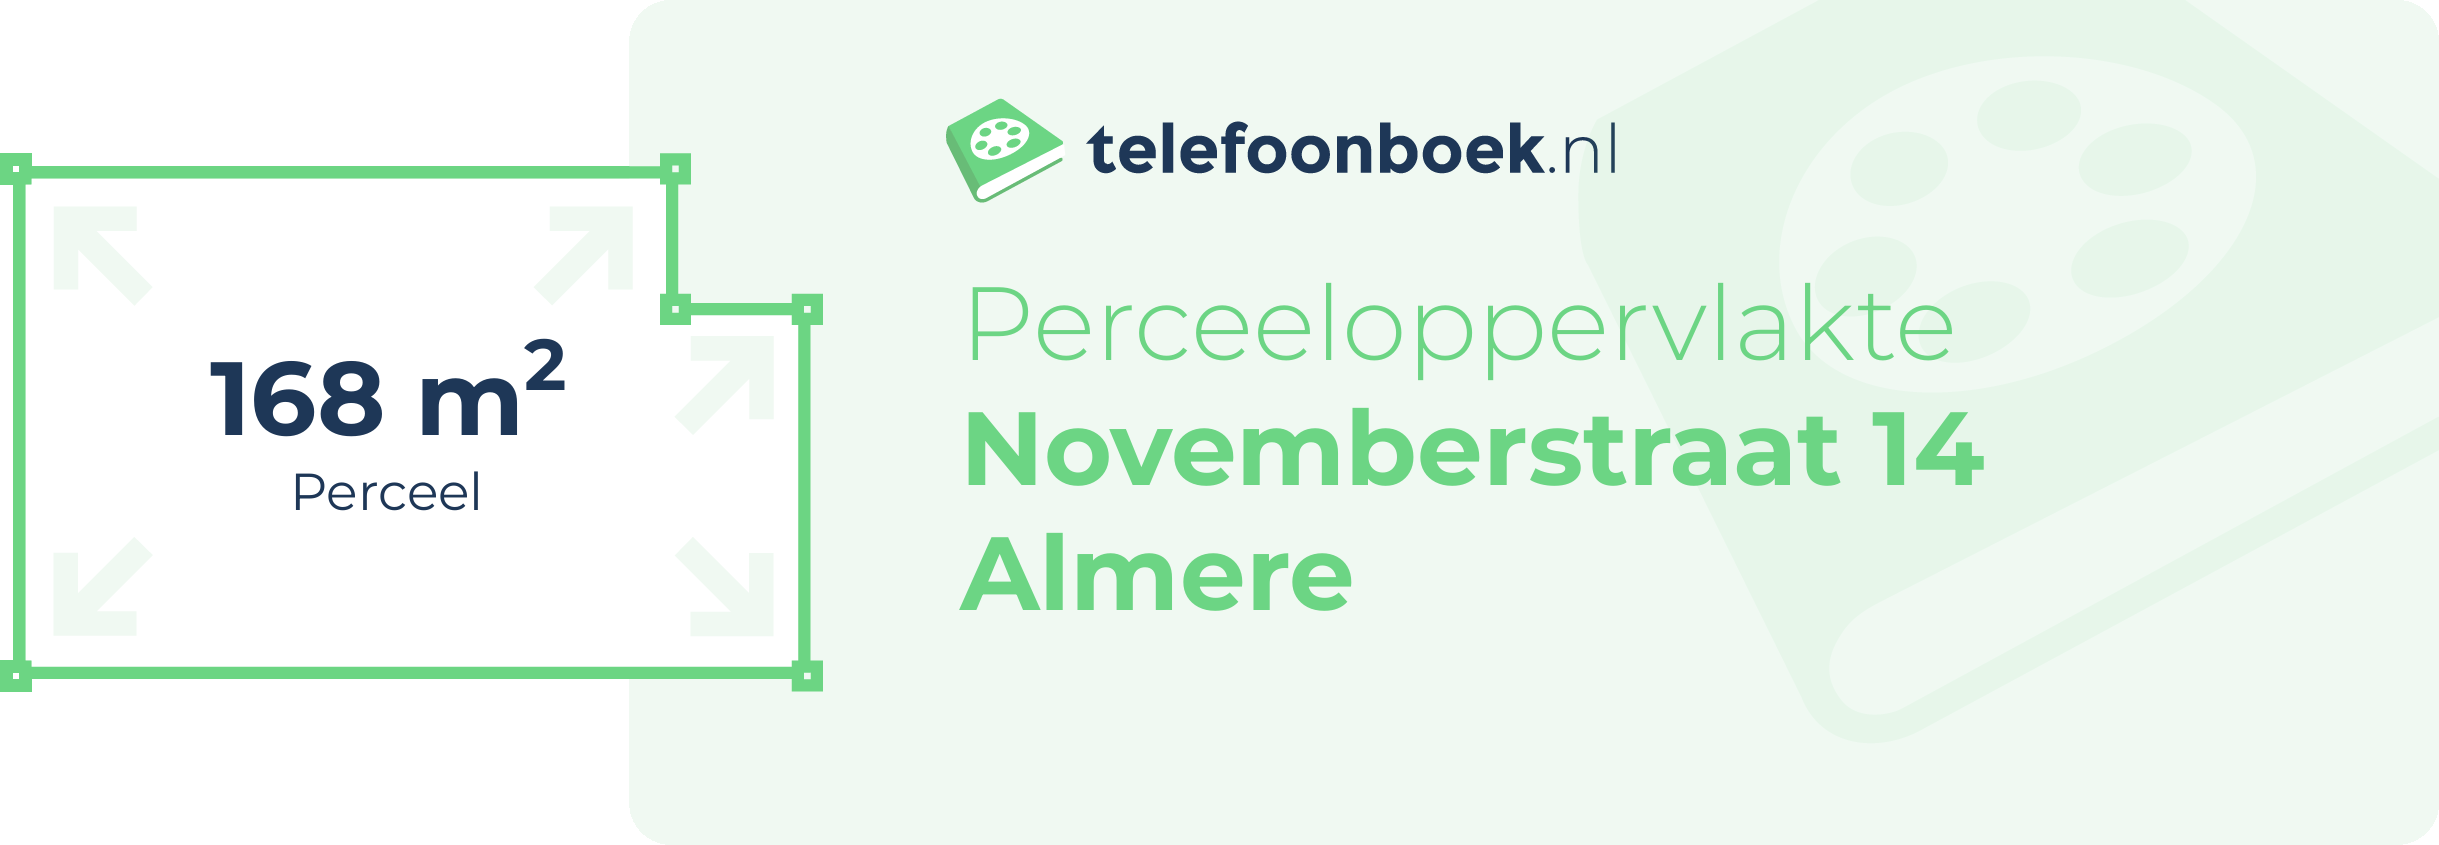 Perceeloppervlakte Novemberstraat 14 Almere